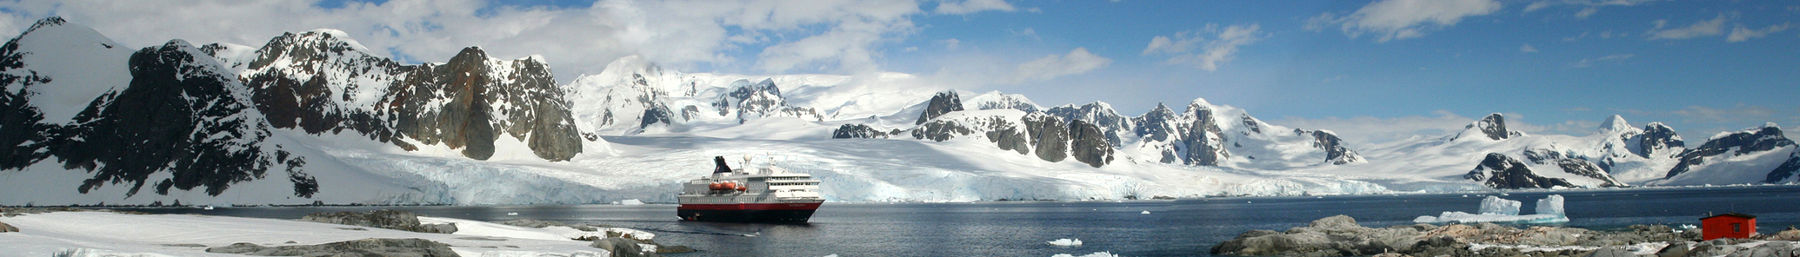 Antartika Peninsula-banner.jpg